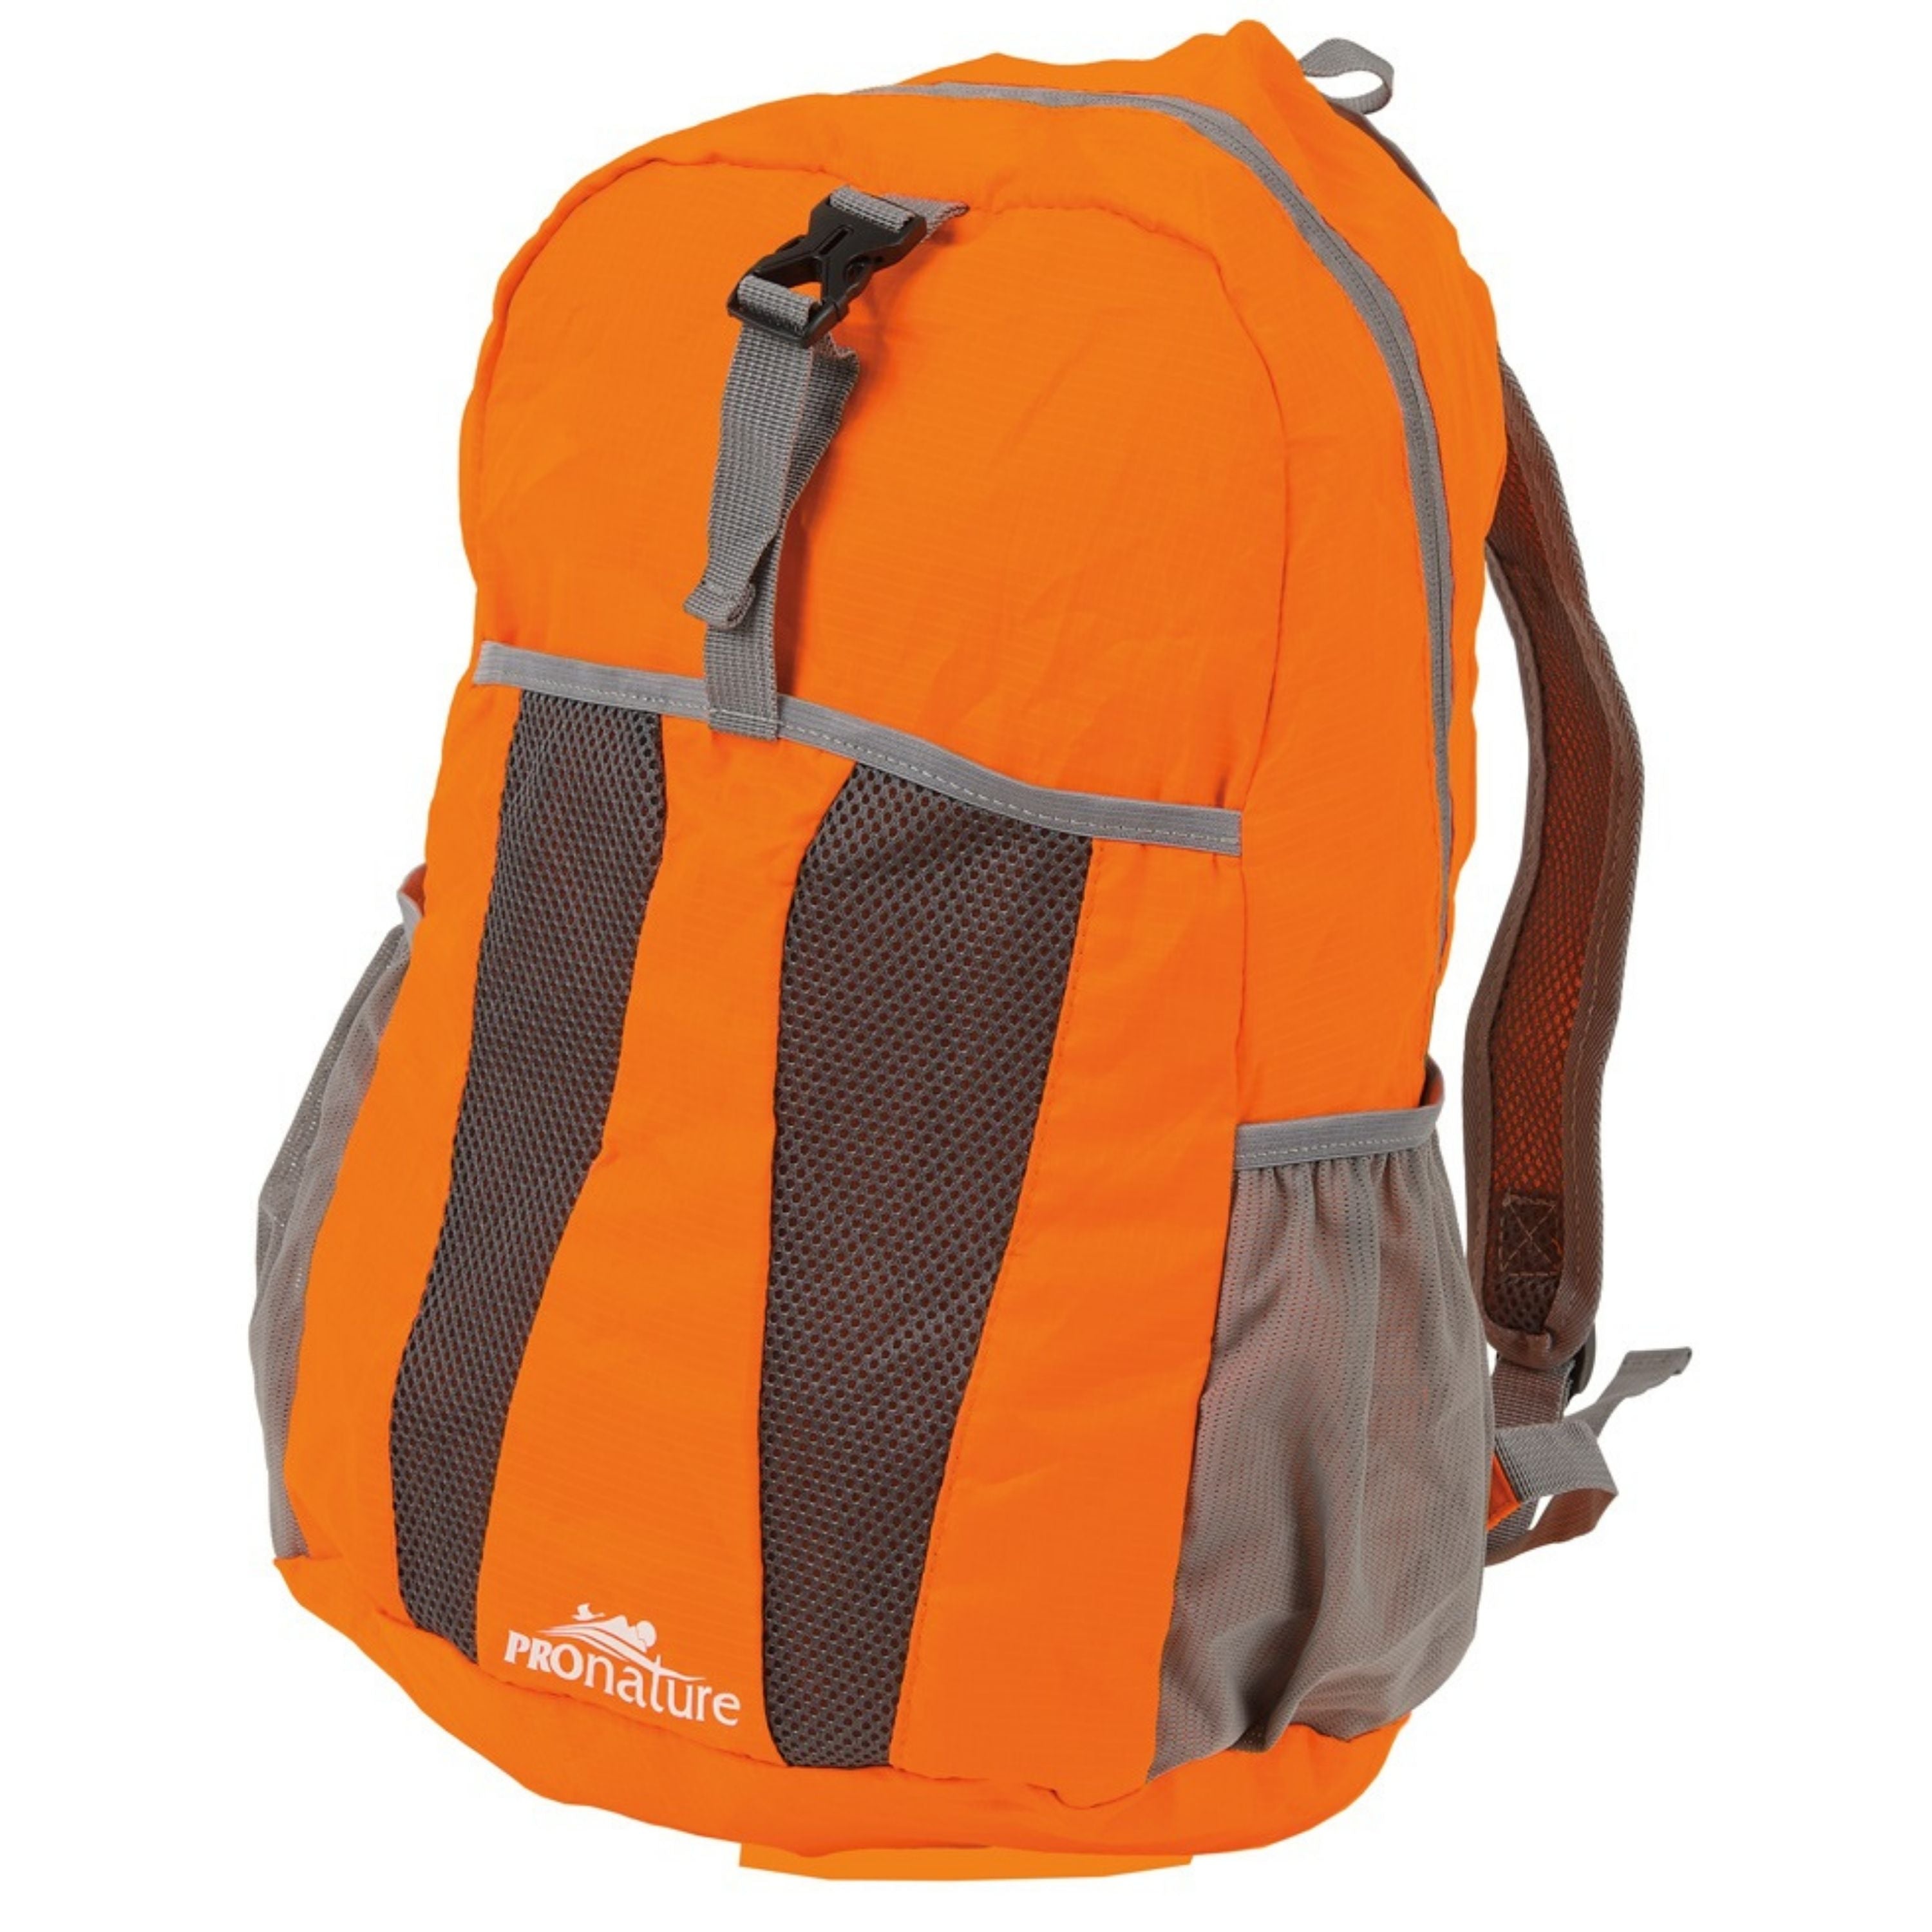 Foldable backpack - 20 L